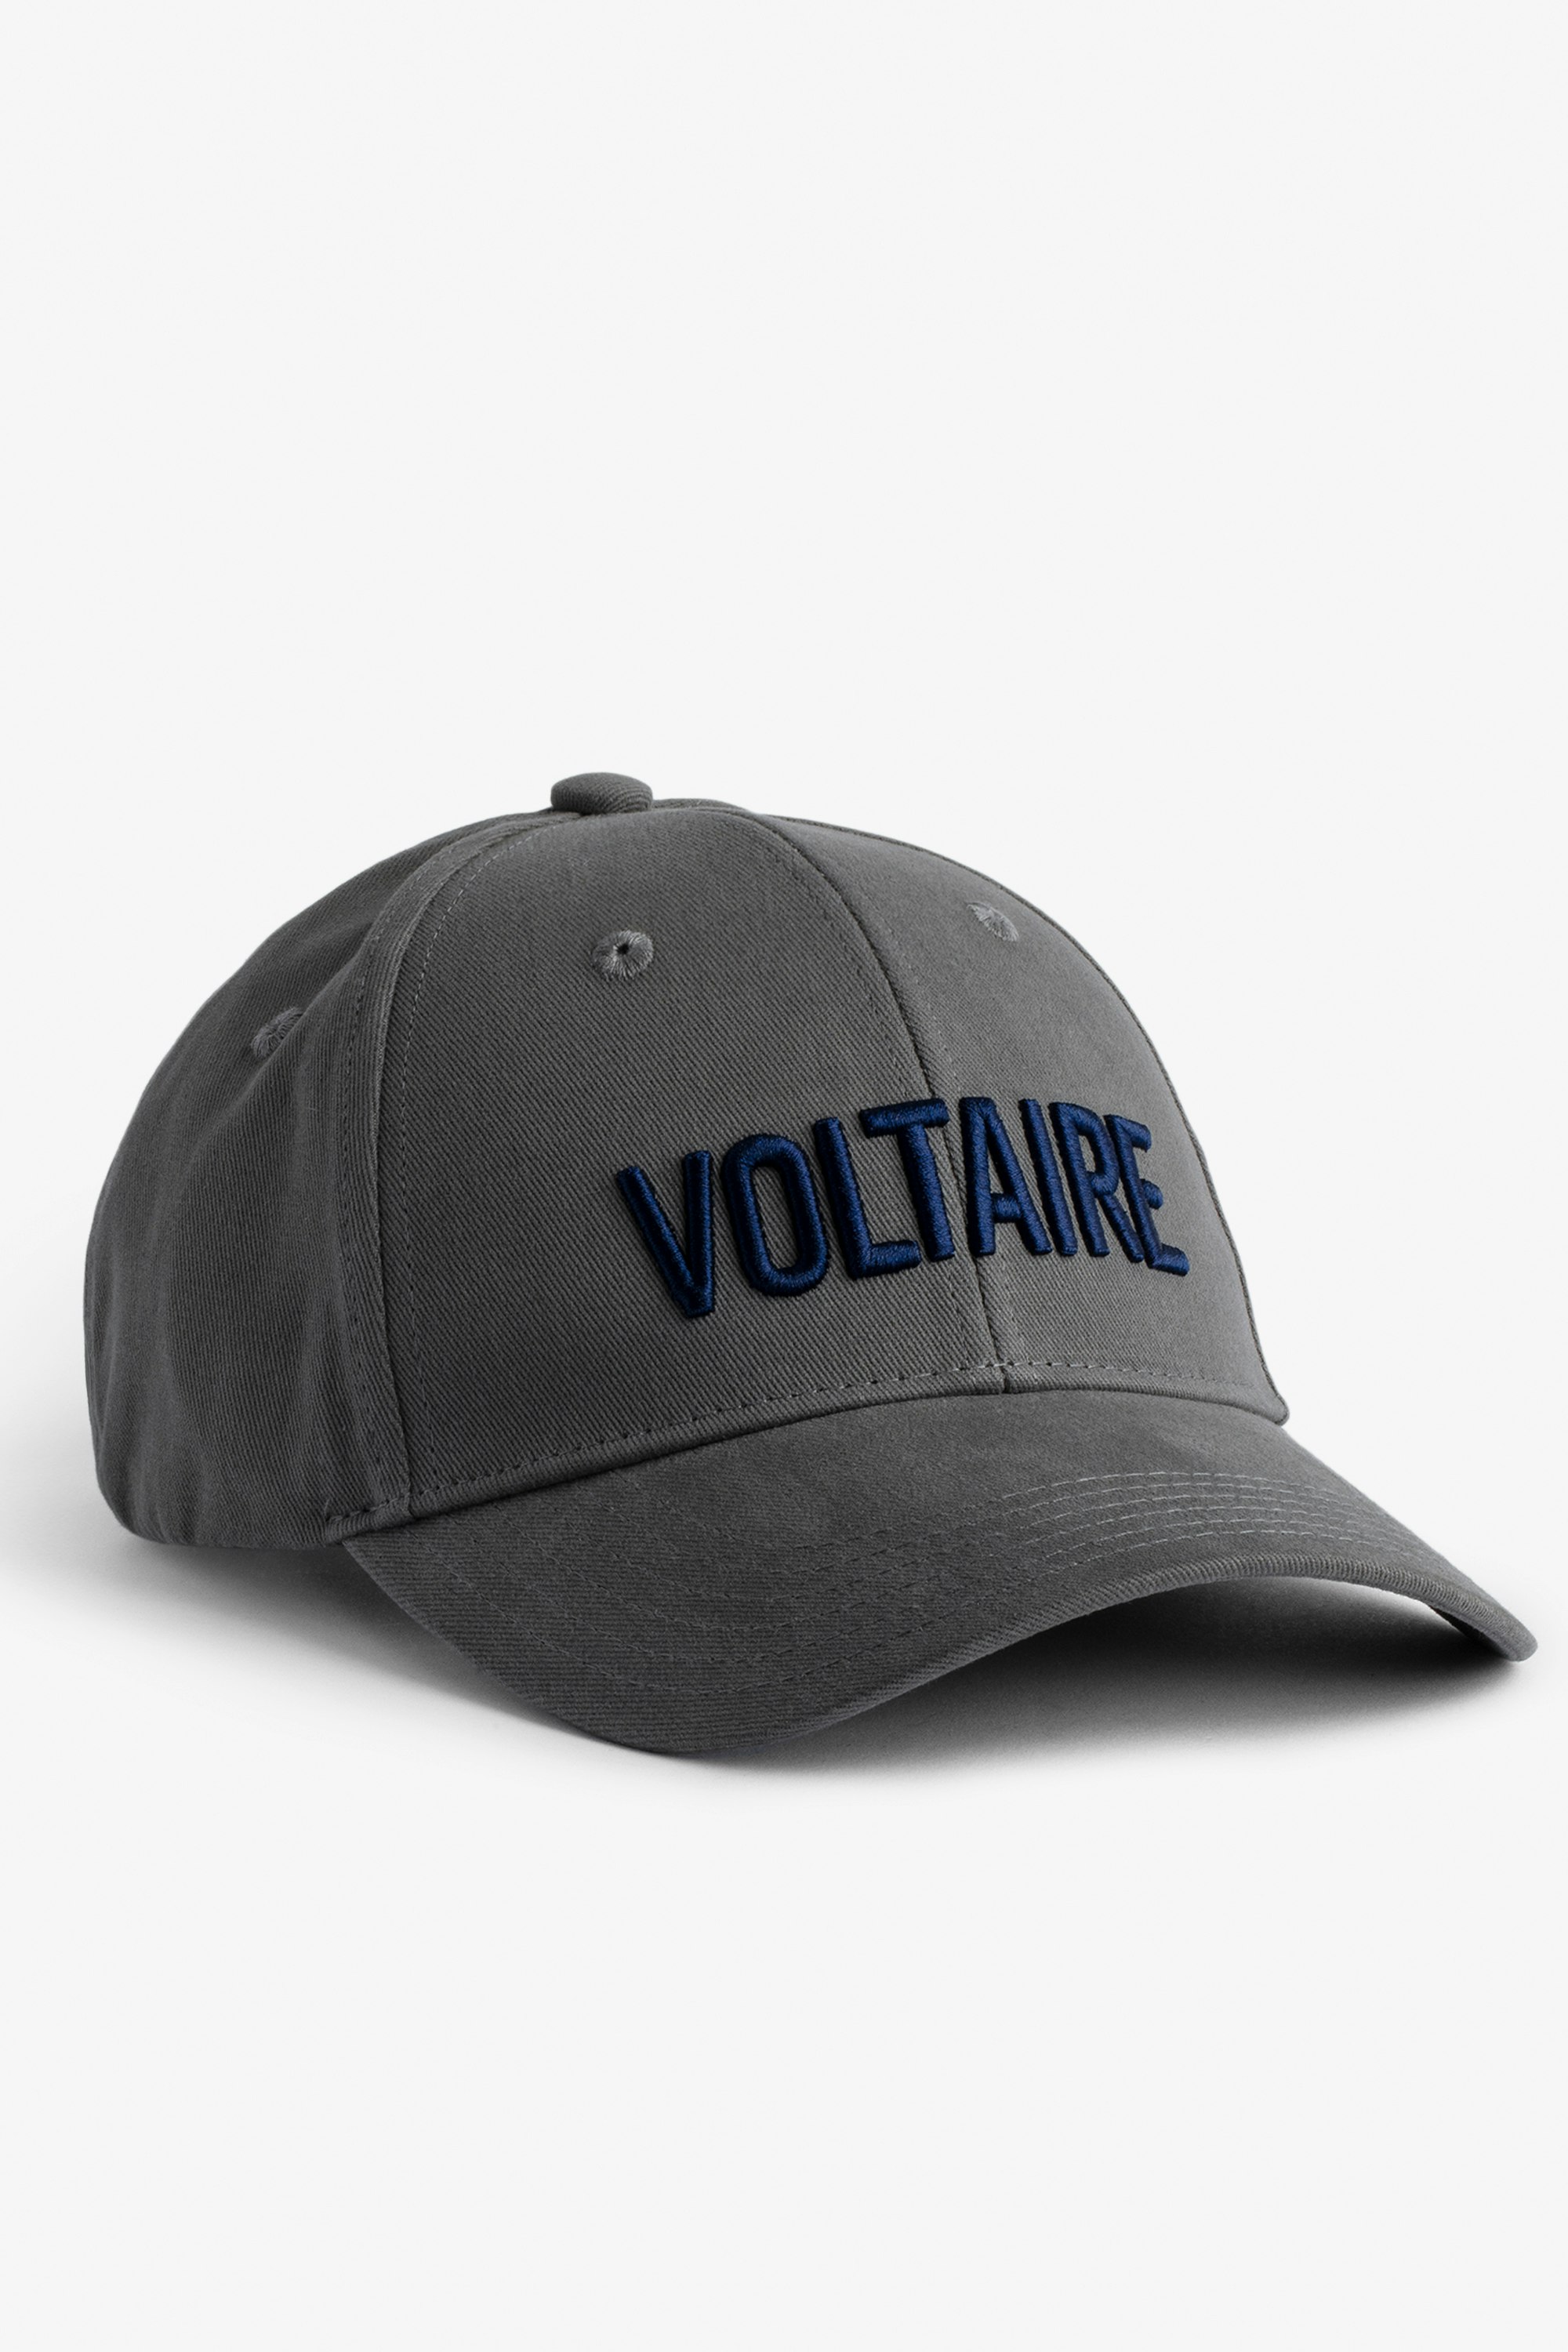 Klelia Voltaire Cap Men's grey cotton cap embroidered “Voltaire”.